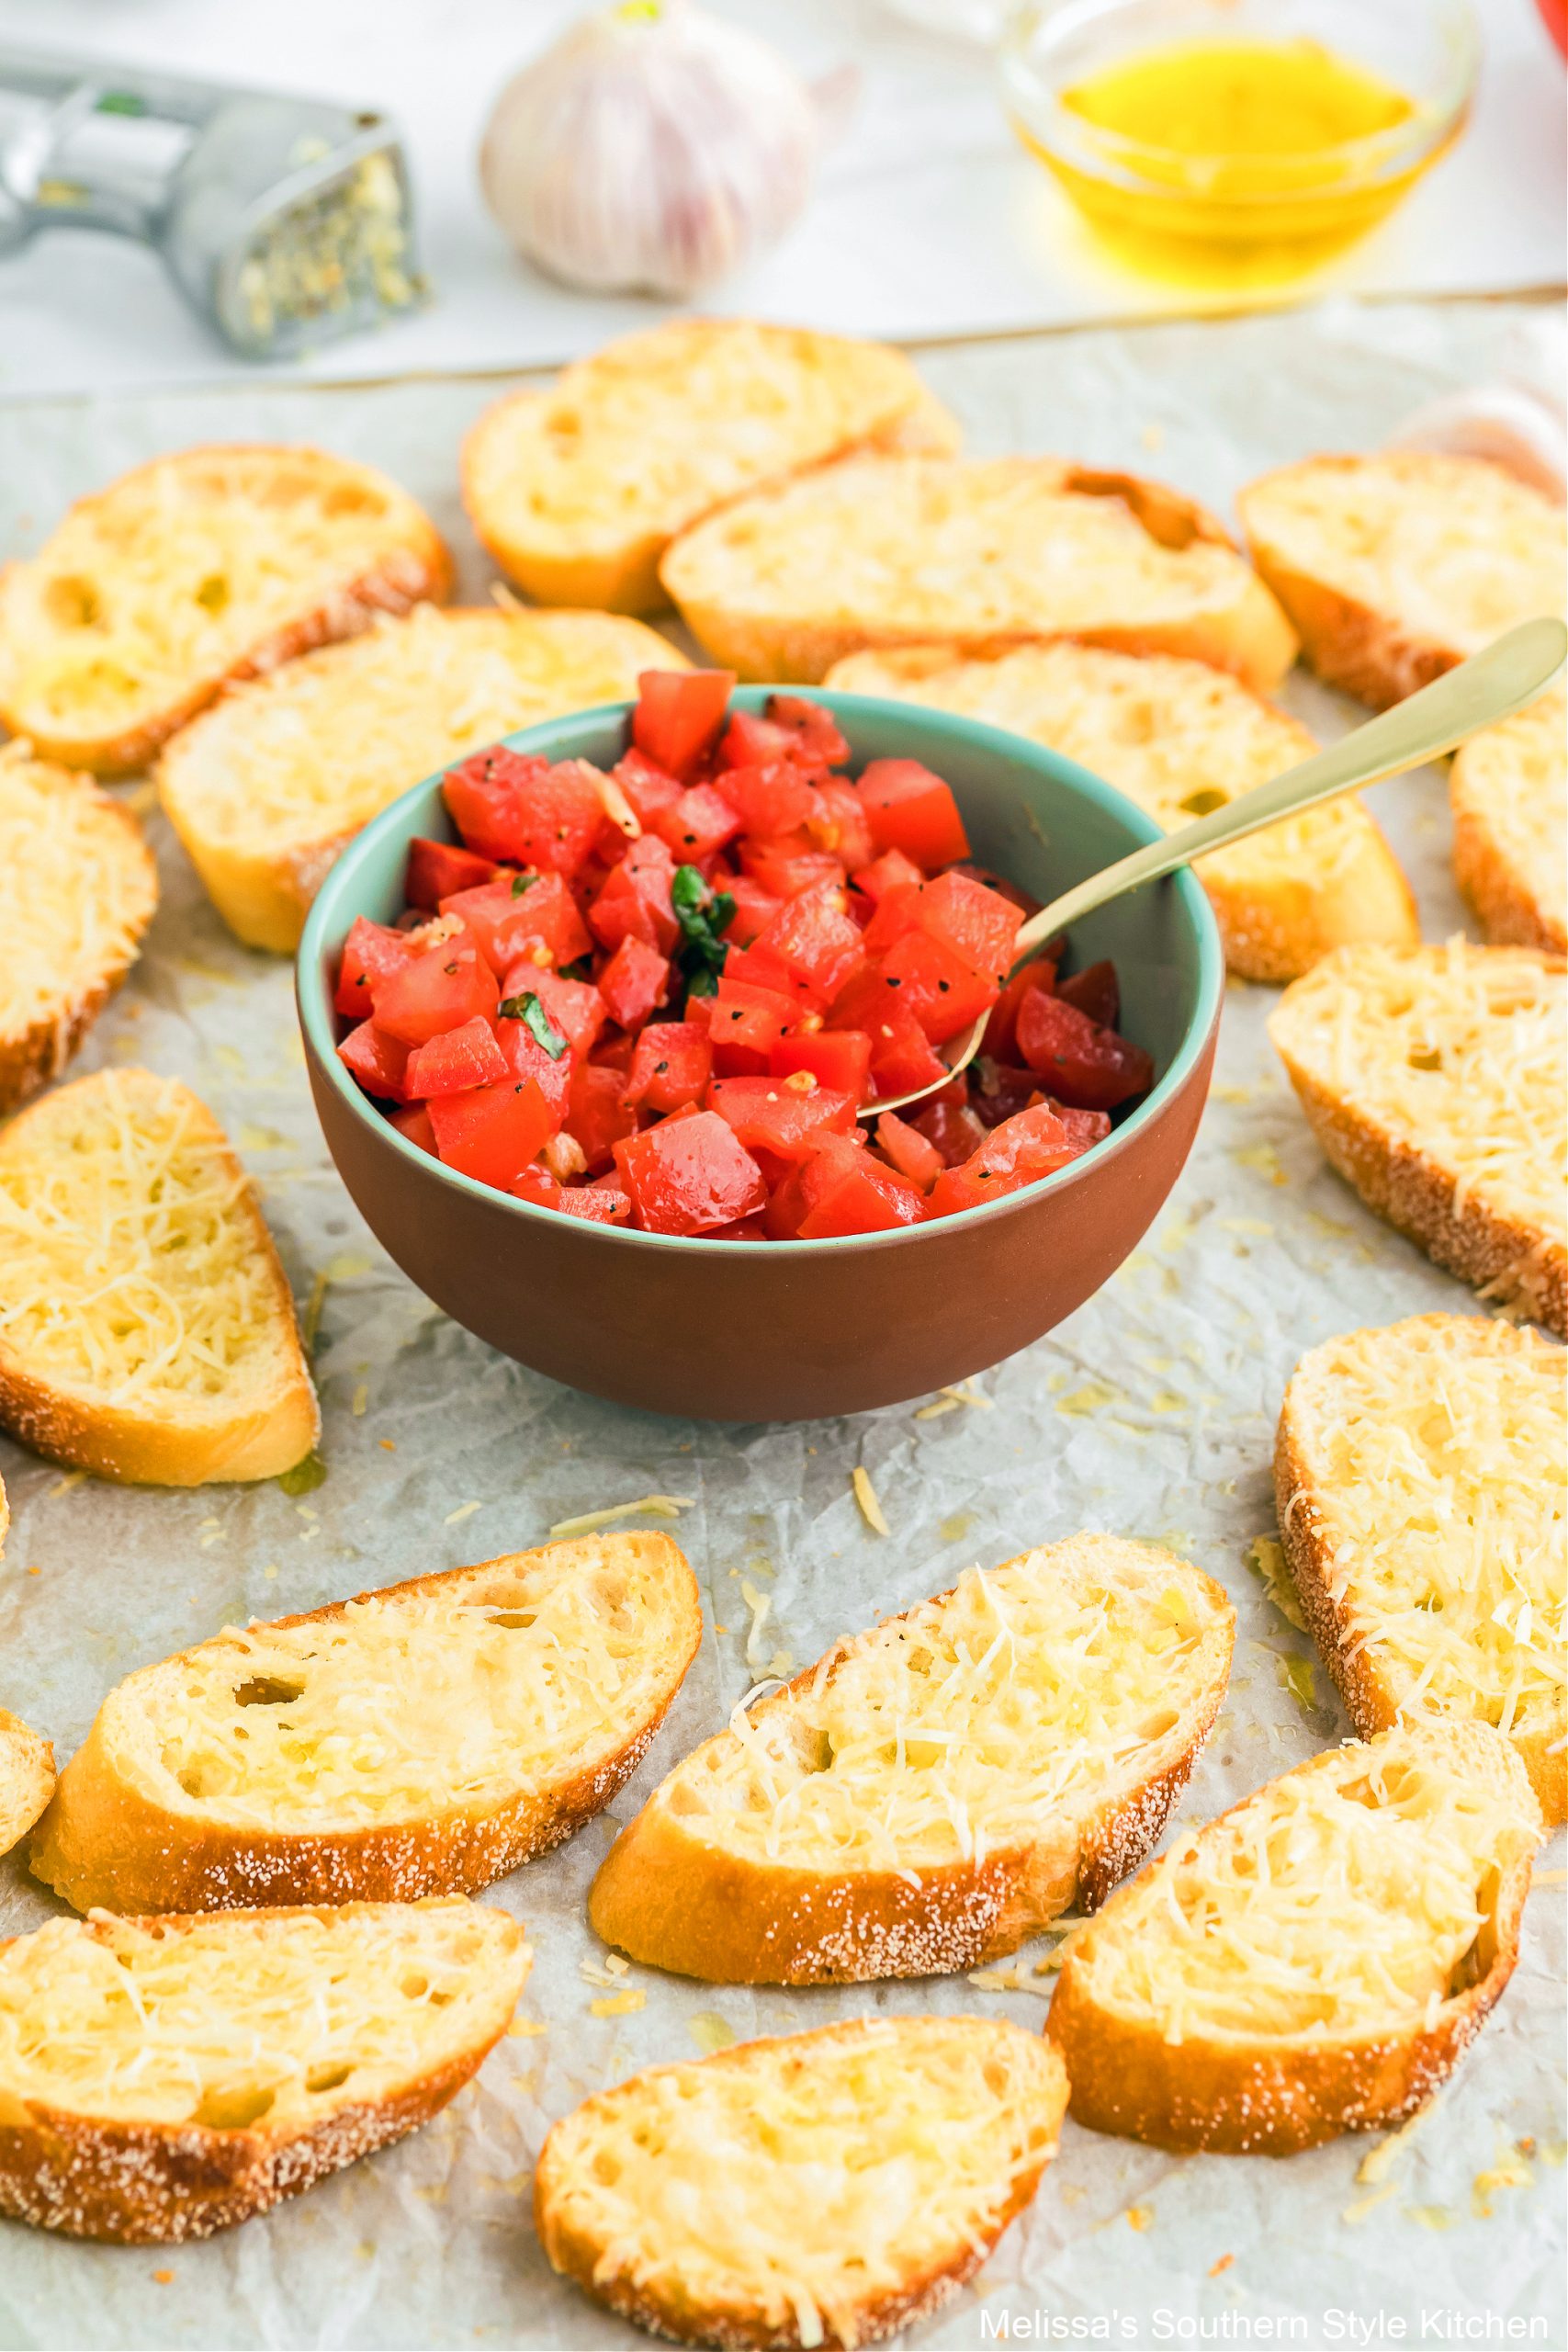 best-fresh-tomato-recipes